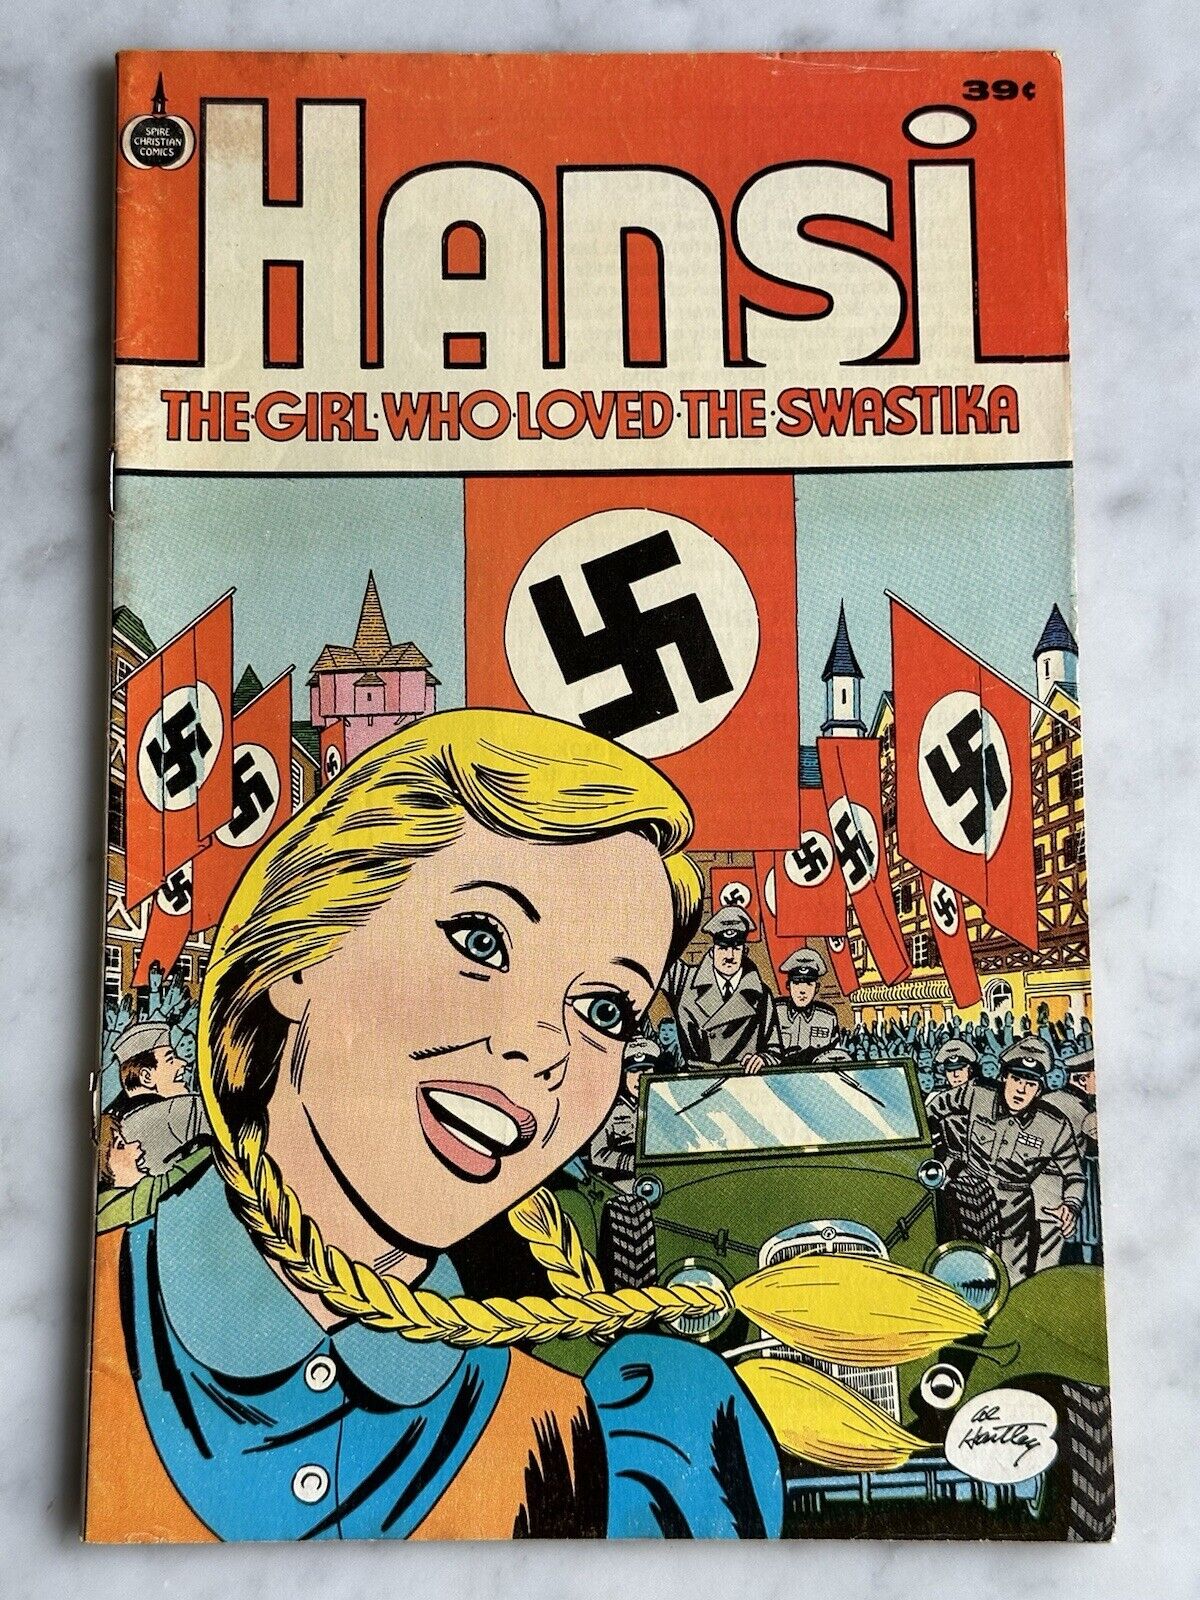 Hansi, the Girl Who Loved the Swastika #1 1st Print $0.39 VG 4.0 (Spire, 1973)